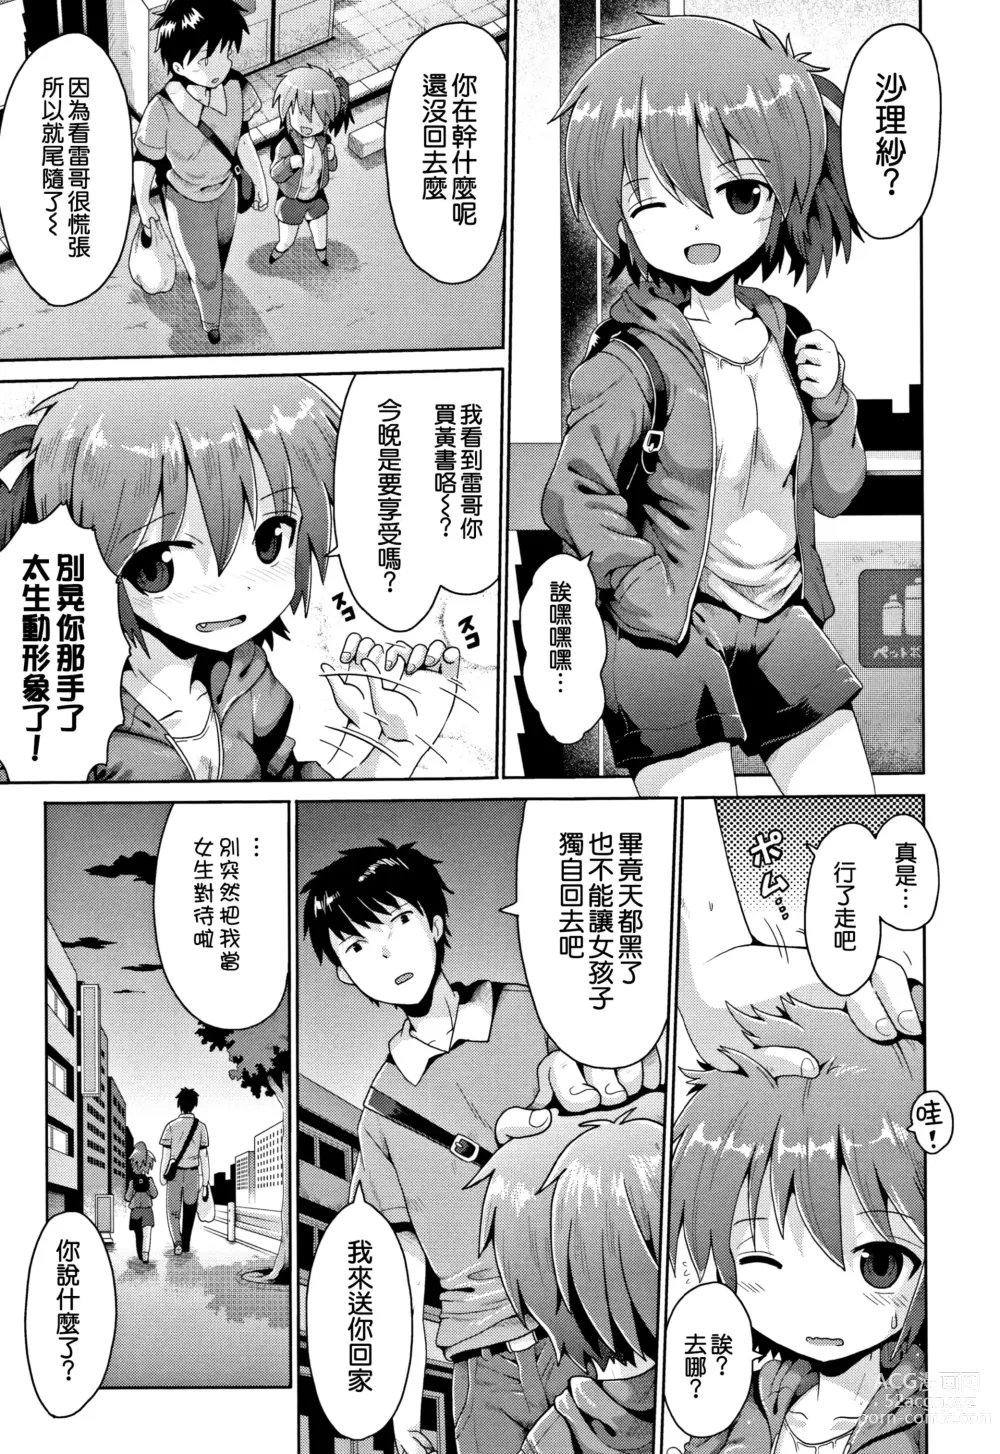 Page 8 of manga Trident 1 + 2 + 3